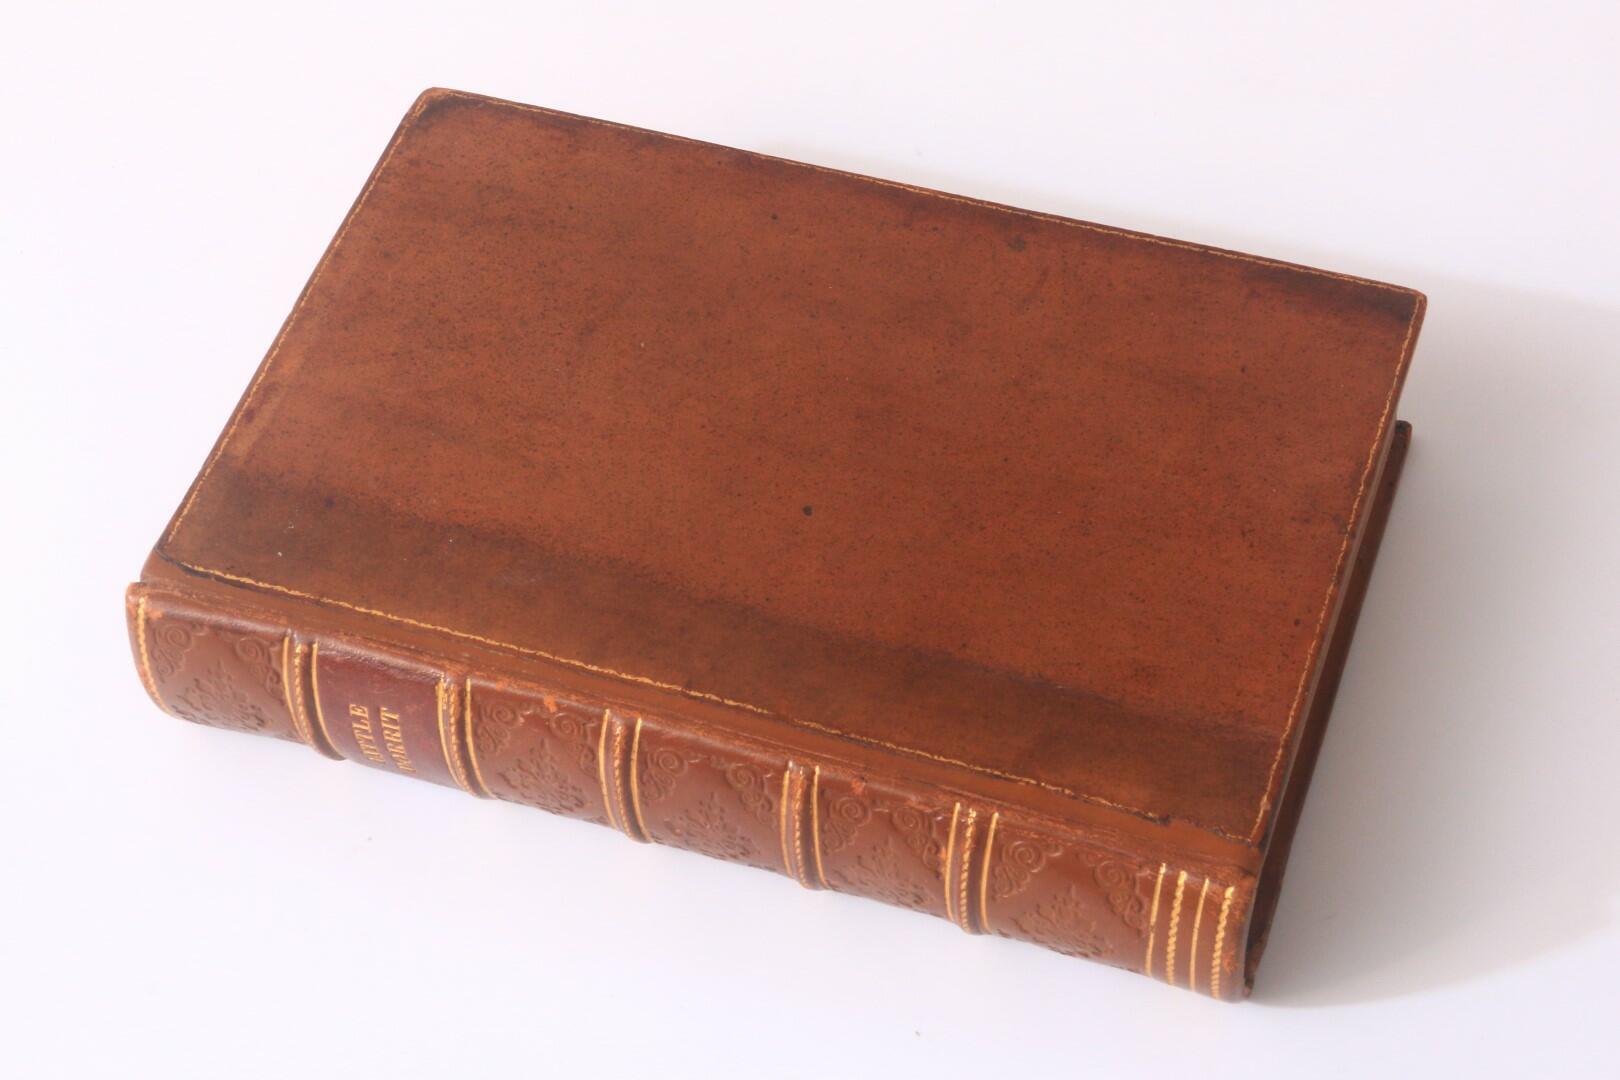 Charles Dickens - Little Dorrit - Bradbury & Evans, 1857, First Edition.